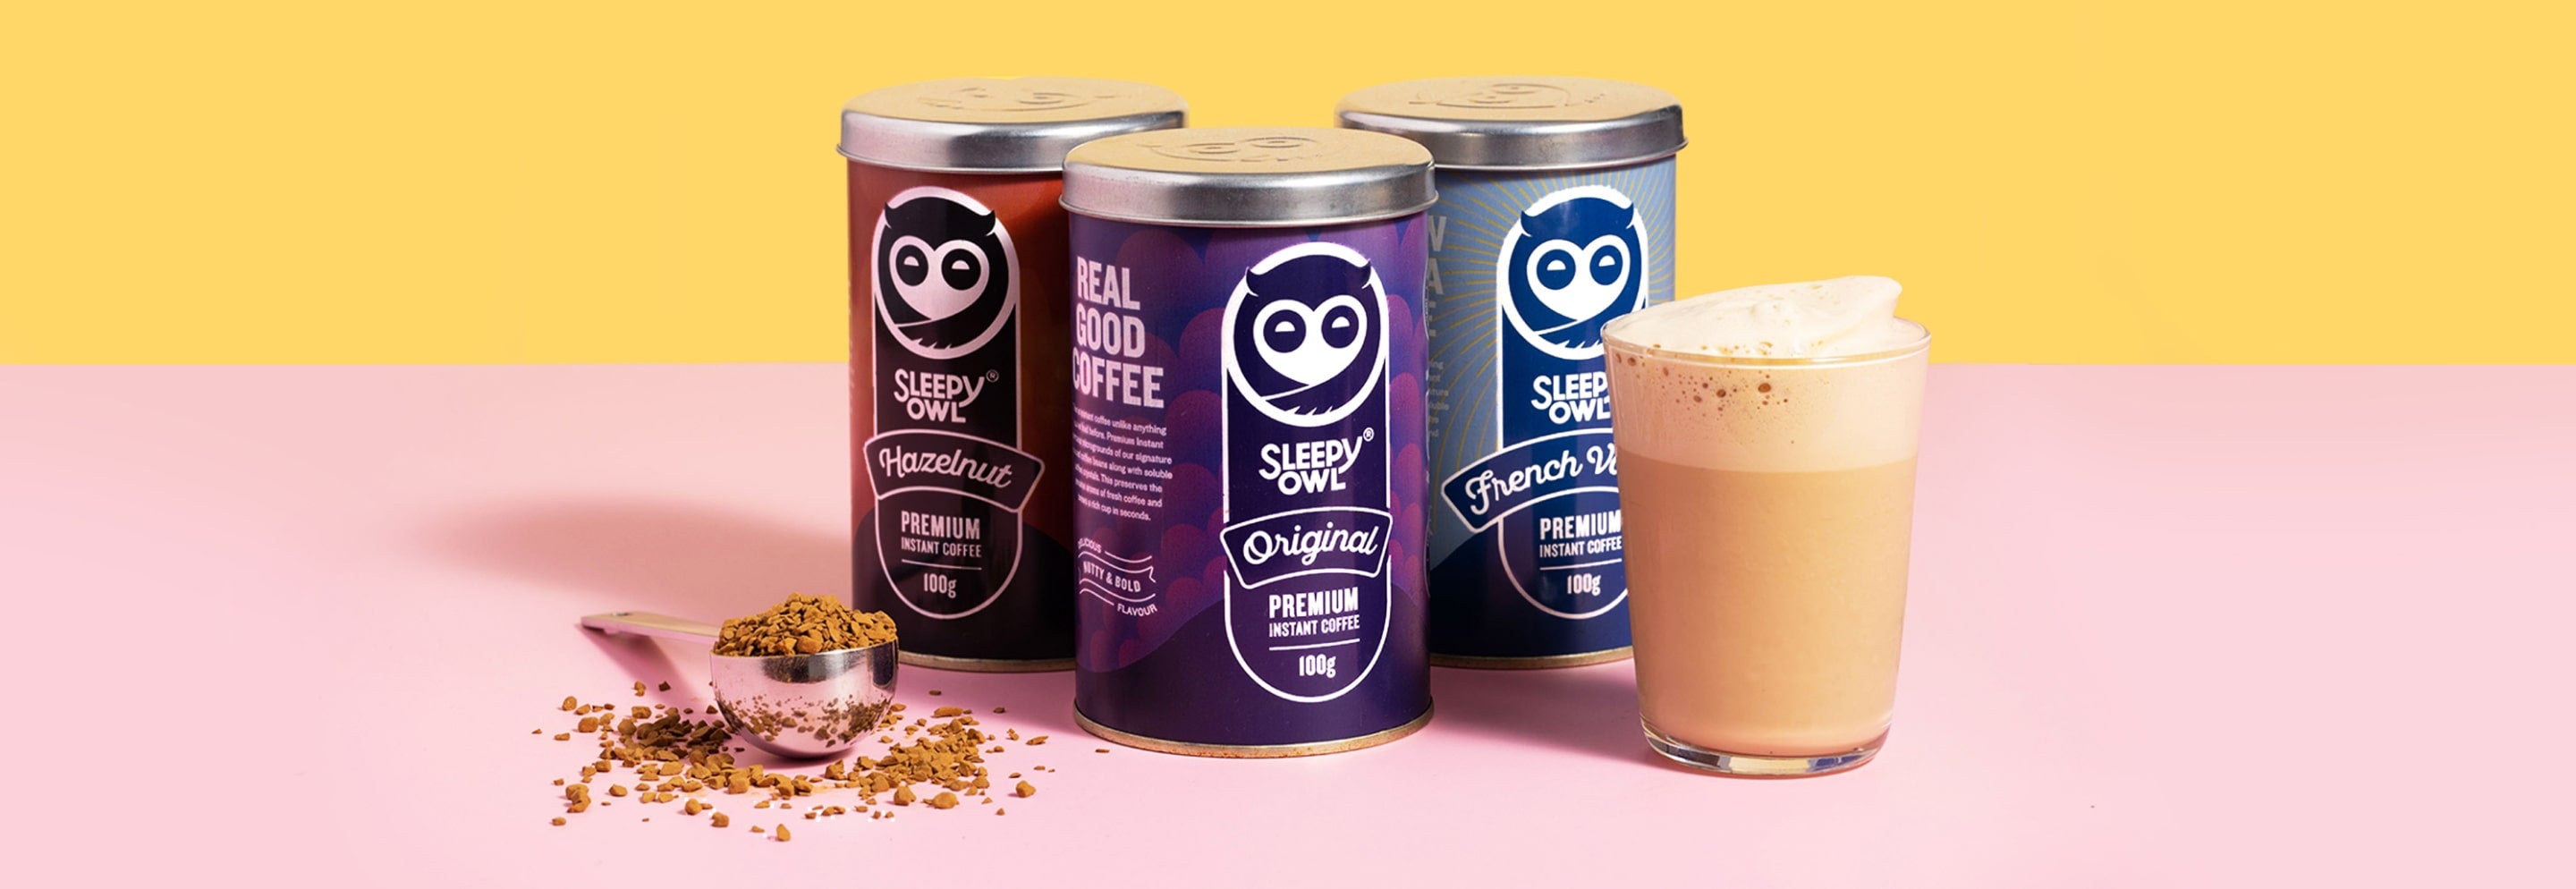 Sleepy Owl - Best Flavoured Instant Coffee Brand